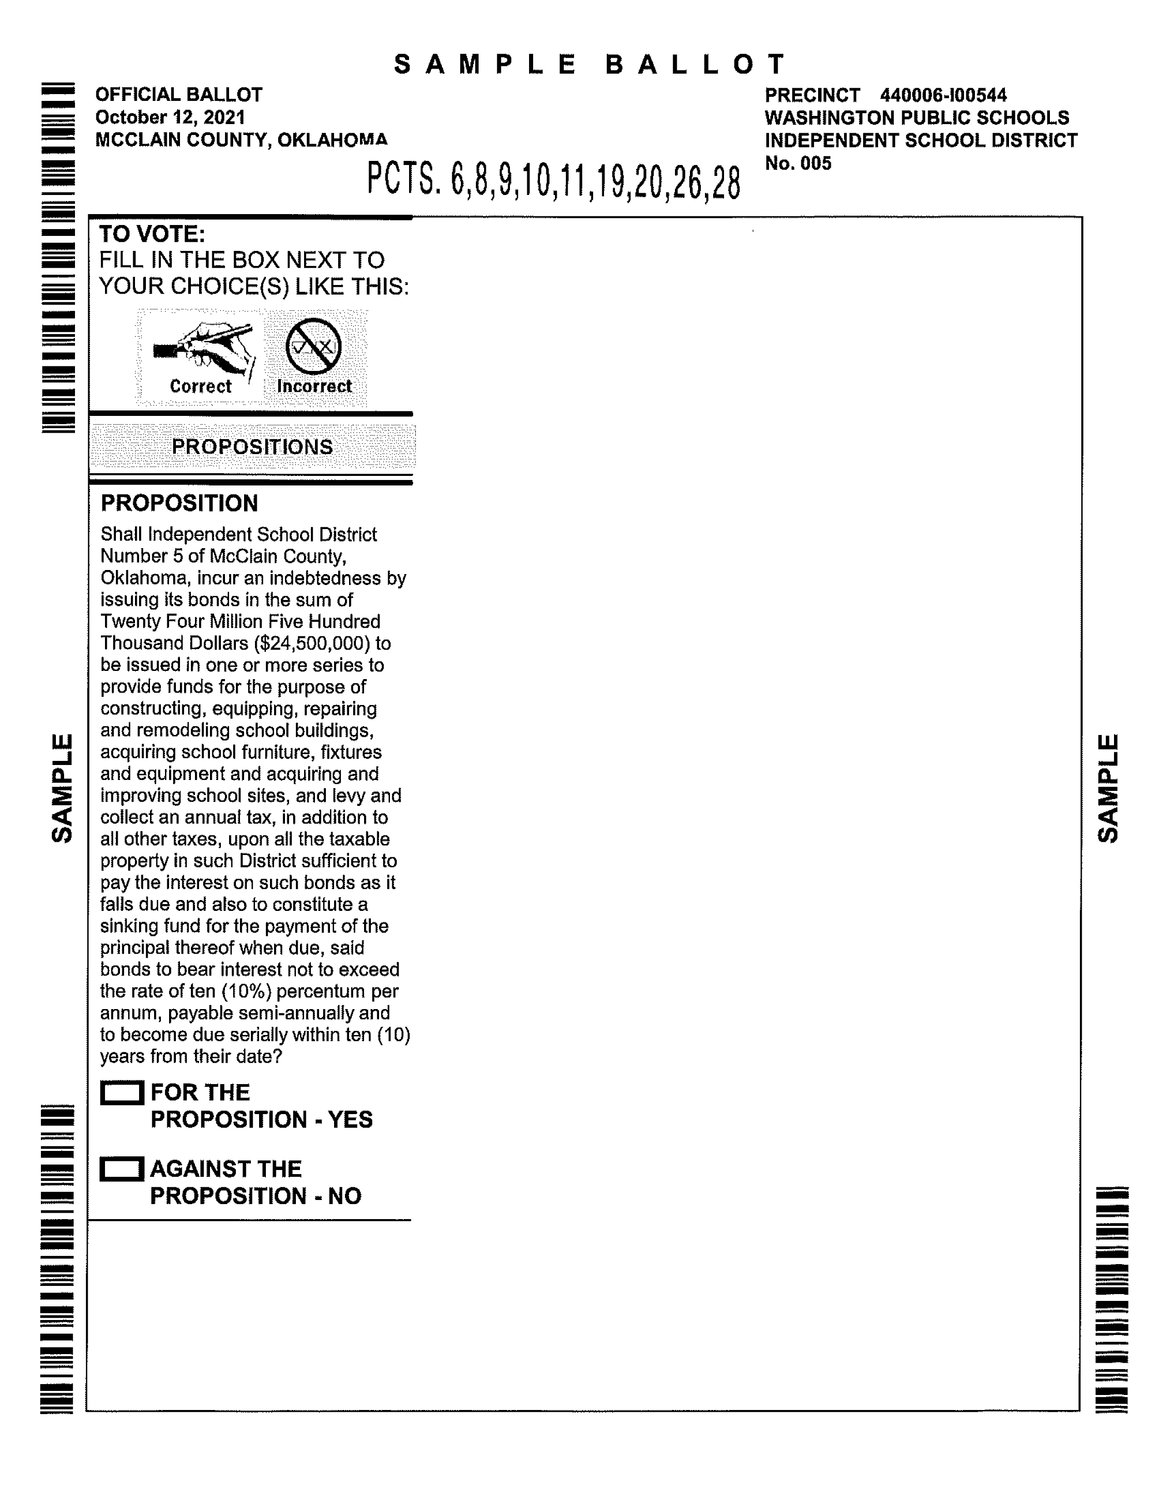 Washington Schools Bond Proposition sample ballot